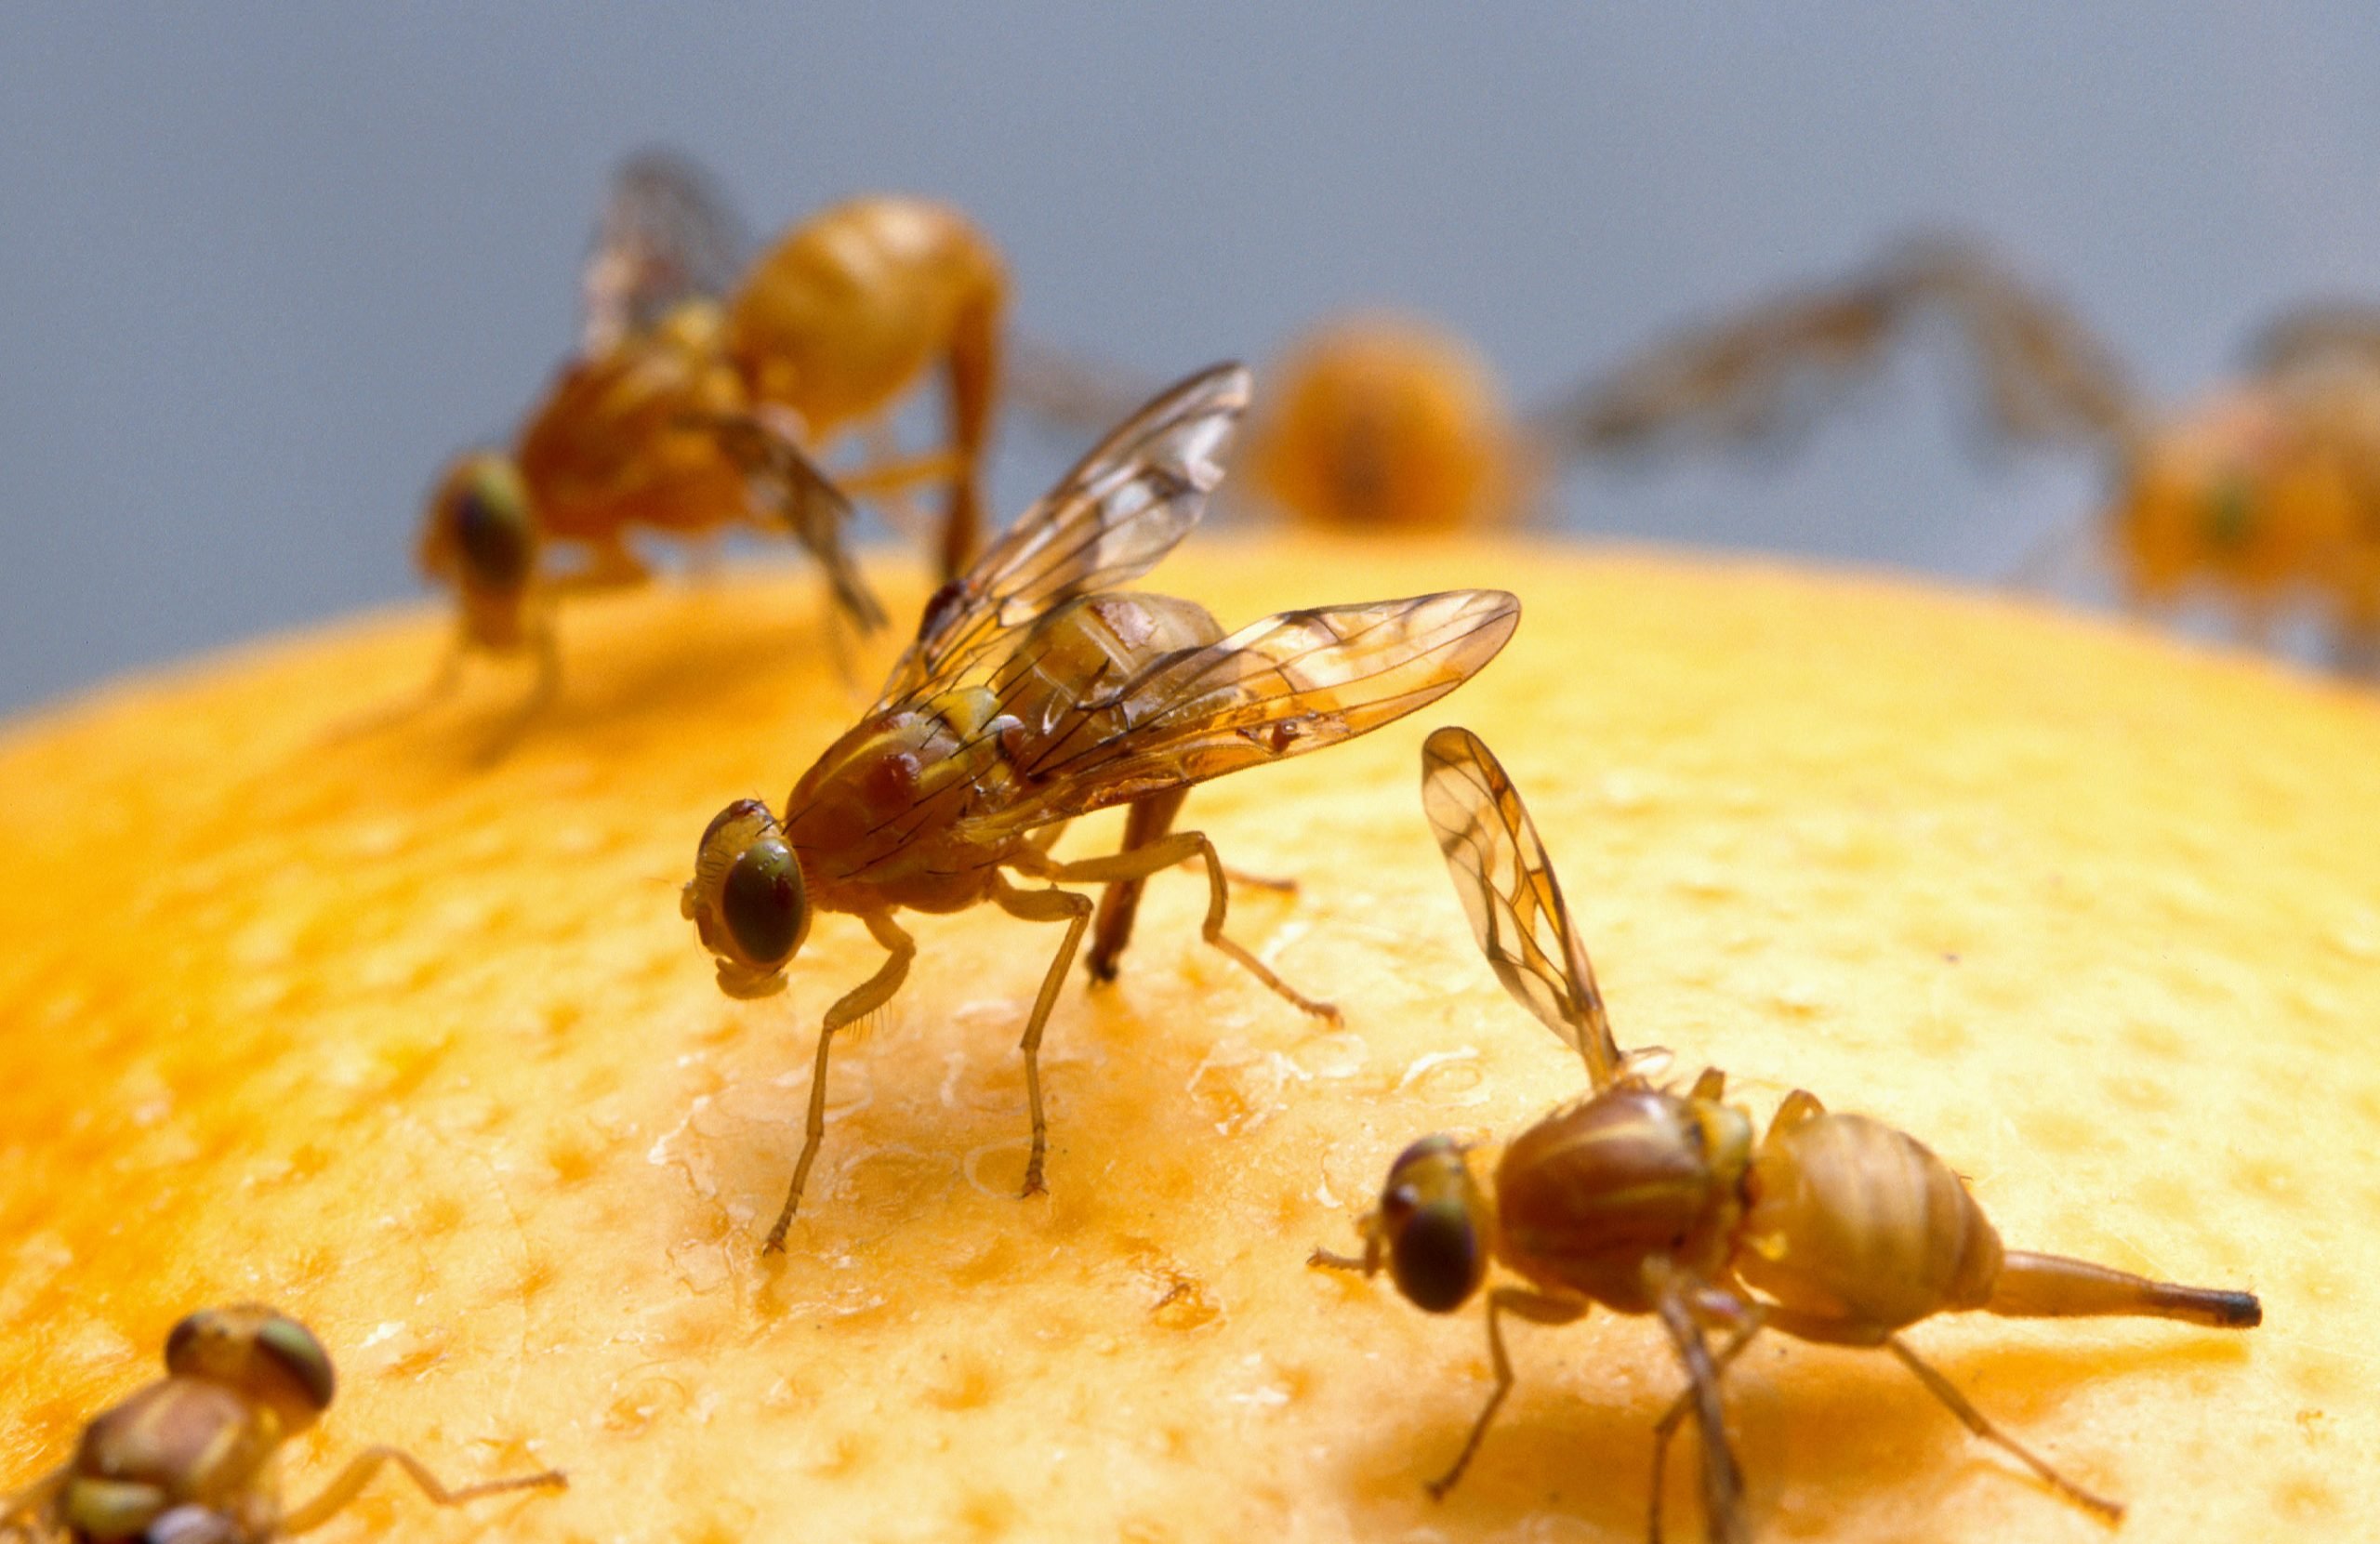 Get Rid of Fruit Flies in Your Home